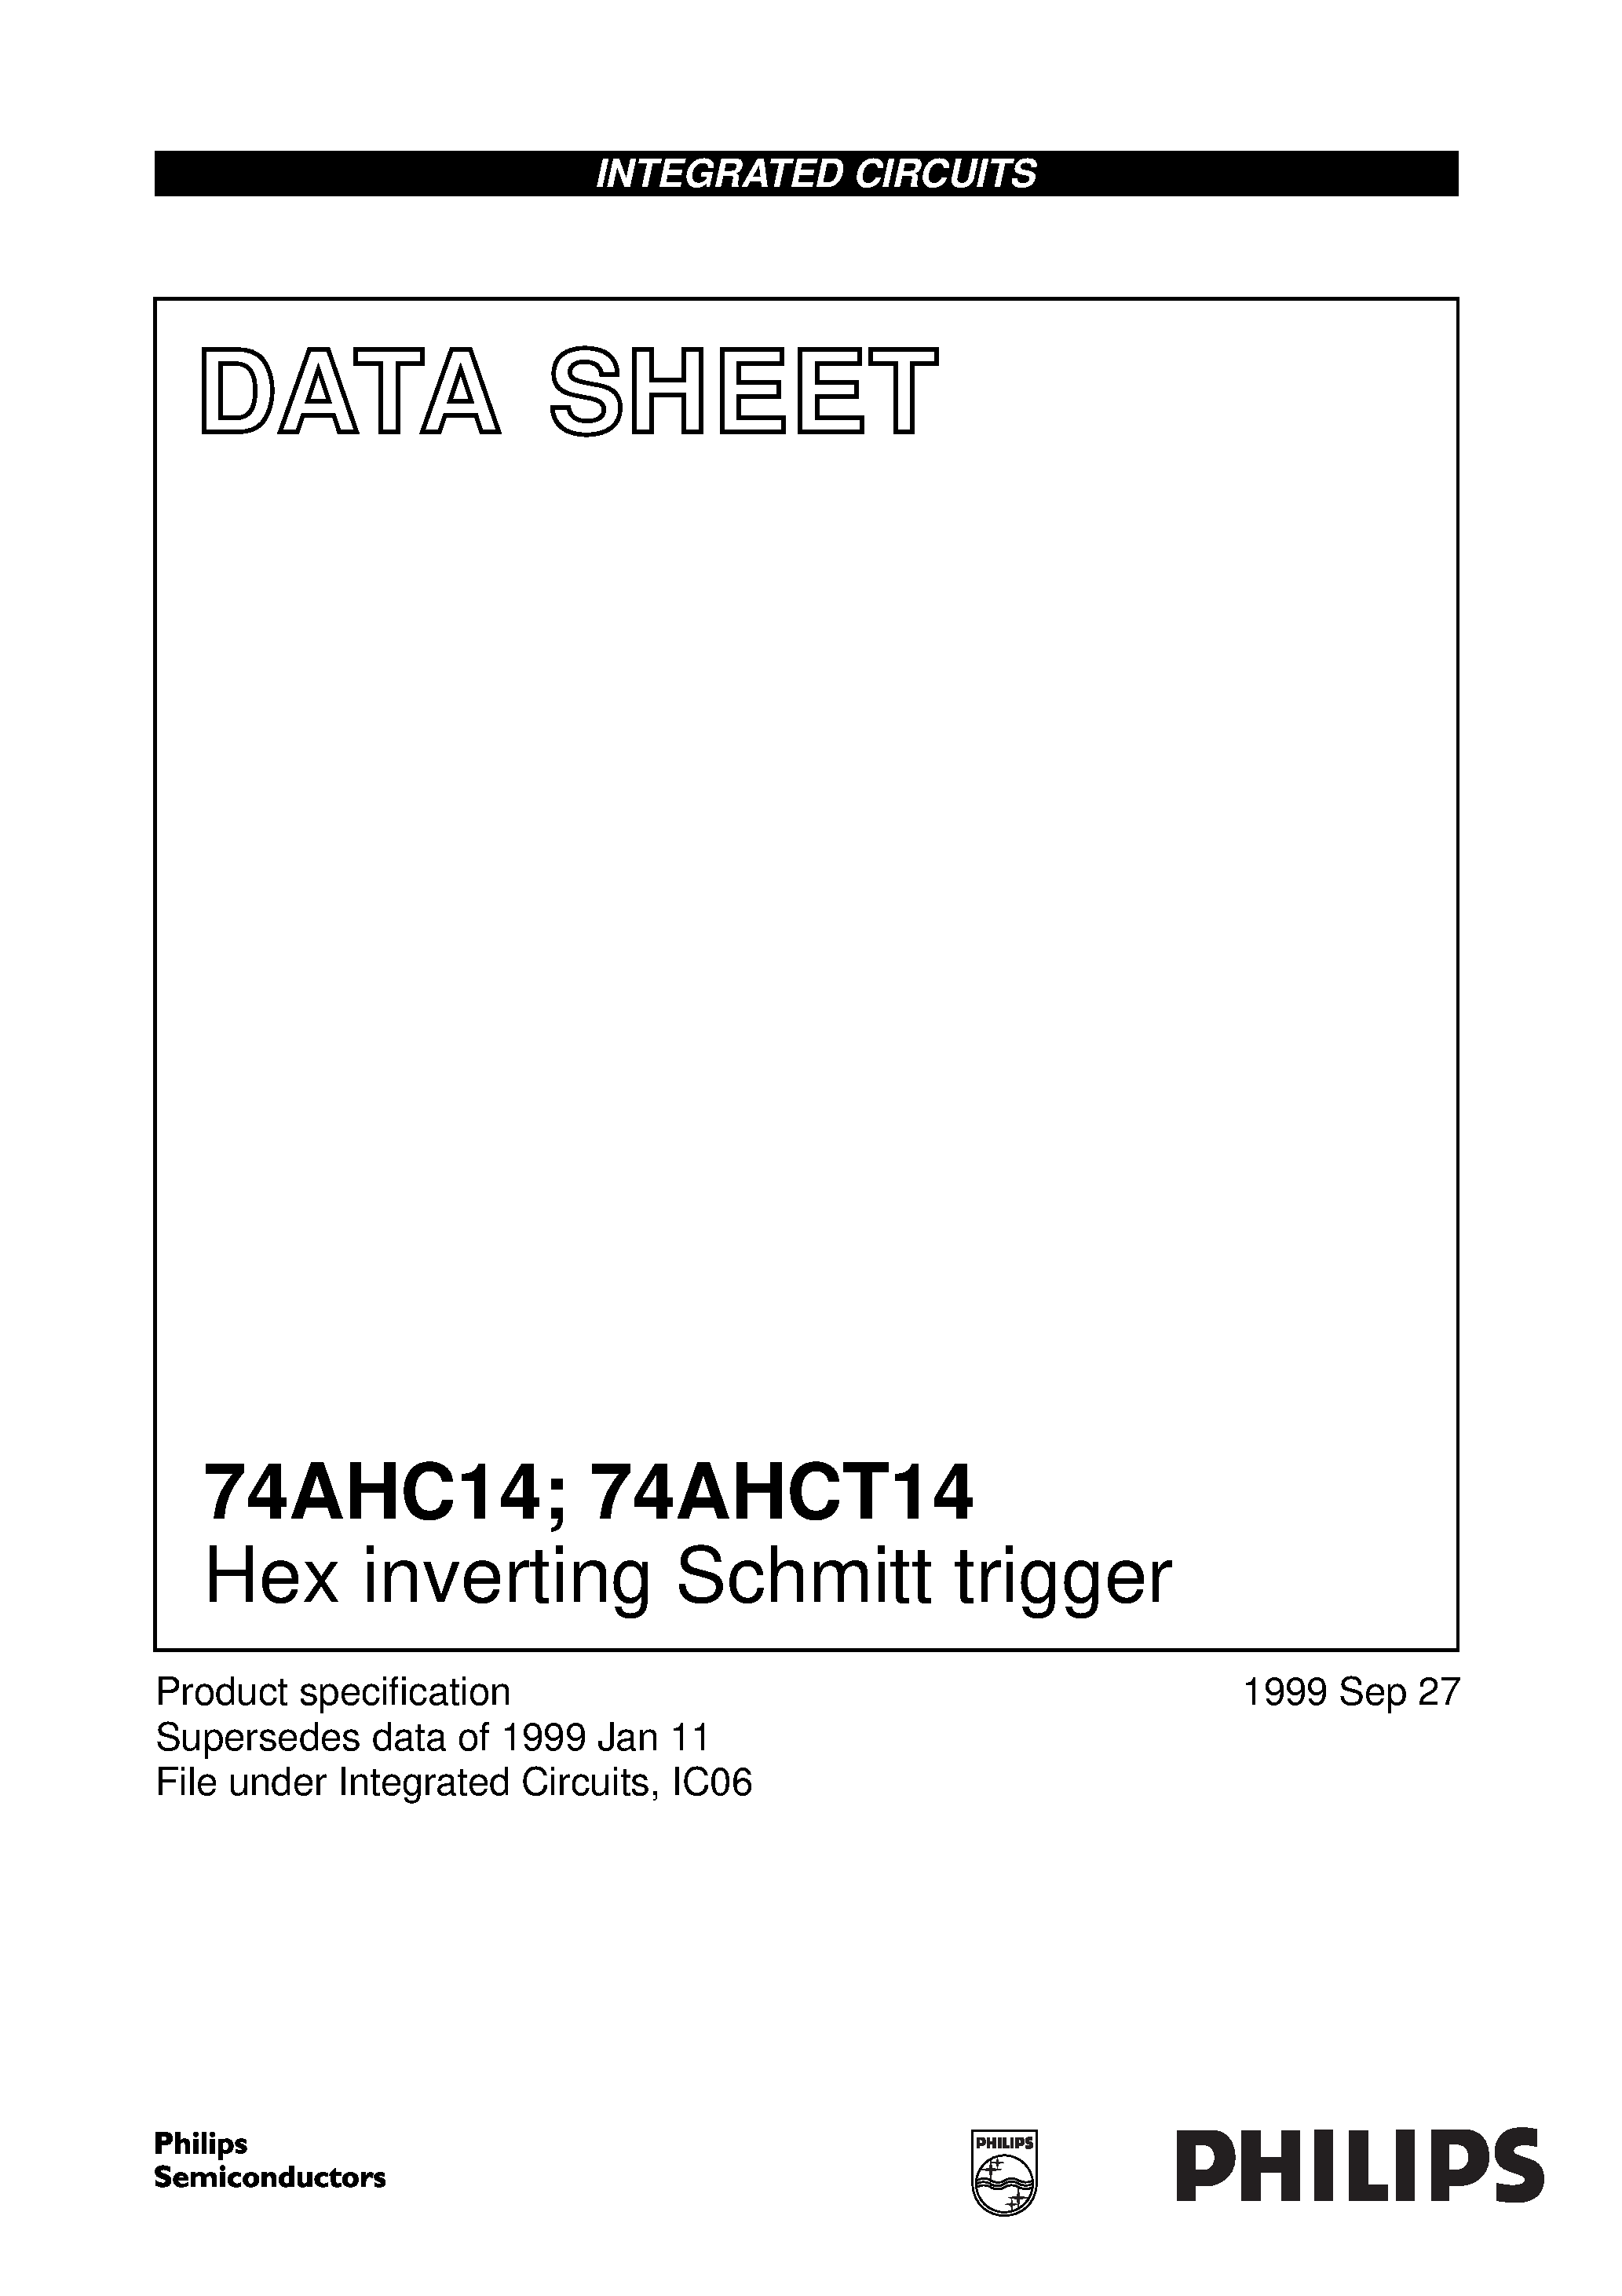 Даташит 74AHC14 - Hex inverting Schmitt trigger страница 1